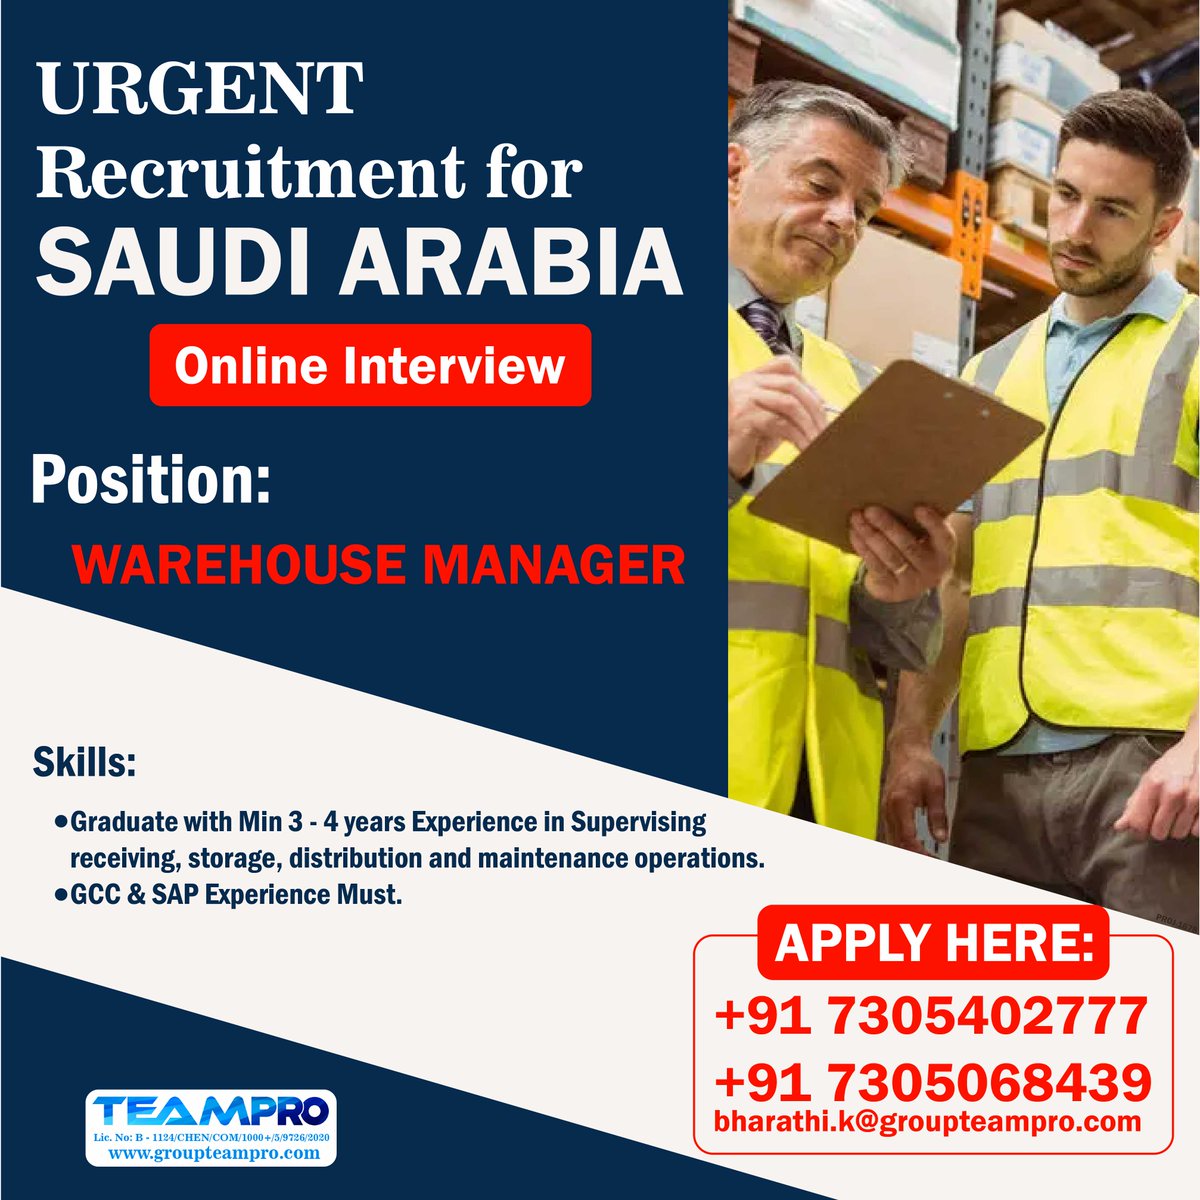 We are hiring for the following positions: #freerecruitment #SaudiArabiaJobs #SupervisorJobs #TechnicianJobs #EngineeringJobs #WelderJobs #HousekeepingJobs #FacilityManagement #CareerOpportunity #ImmediateHiring #JobOpening #MiddleEastJobs